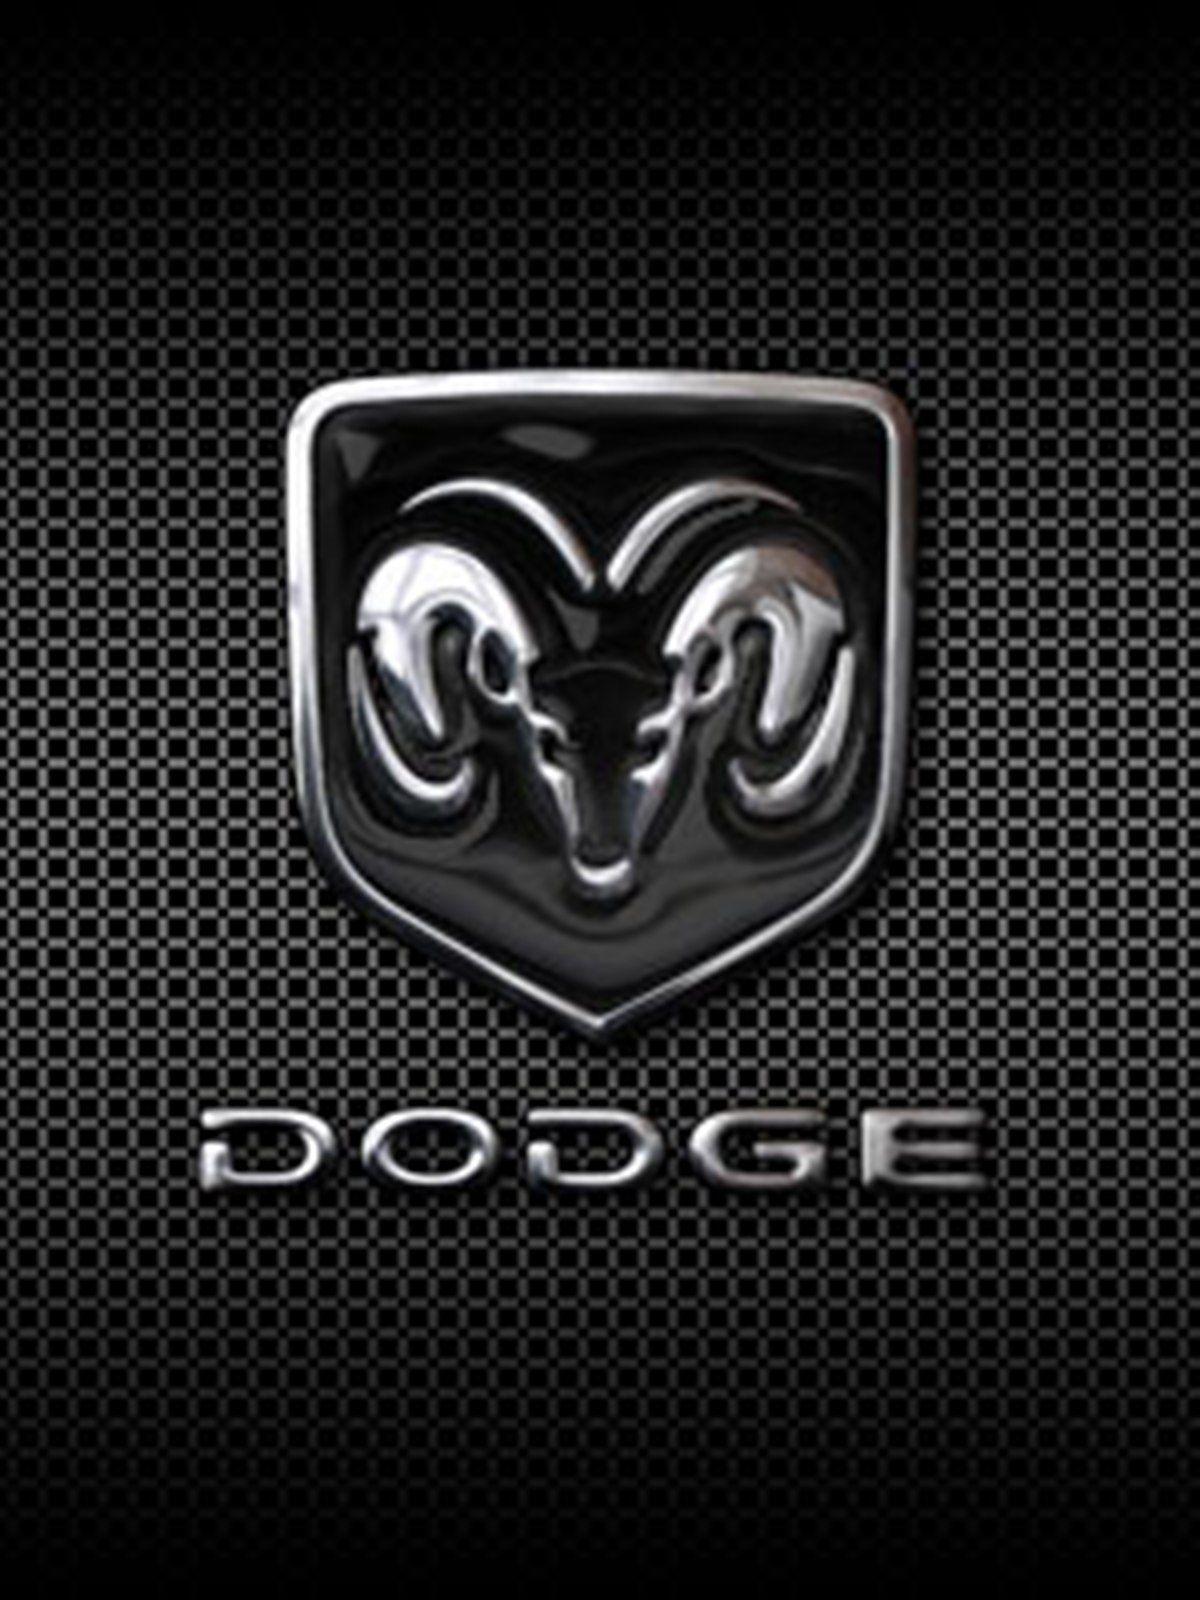 Dodge Logo Wallpaper Free Dodge Logo Background